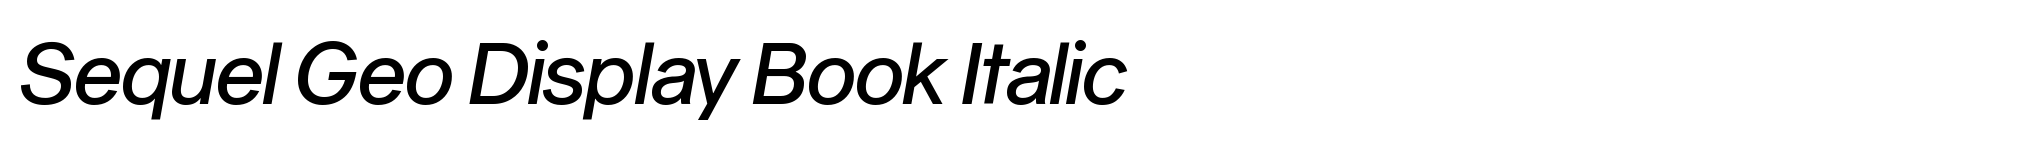 Sequel Geo Display Book Italic image